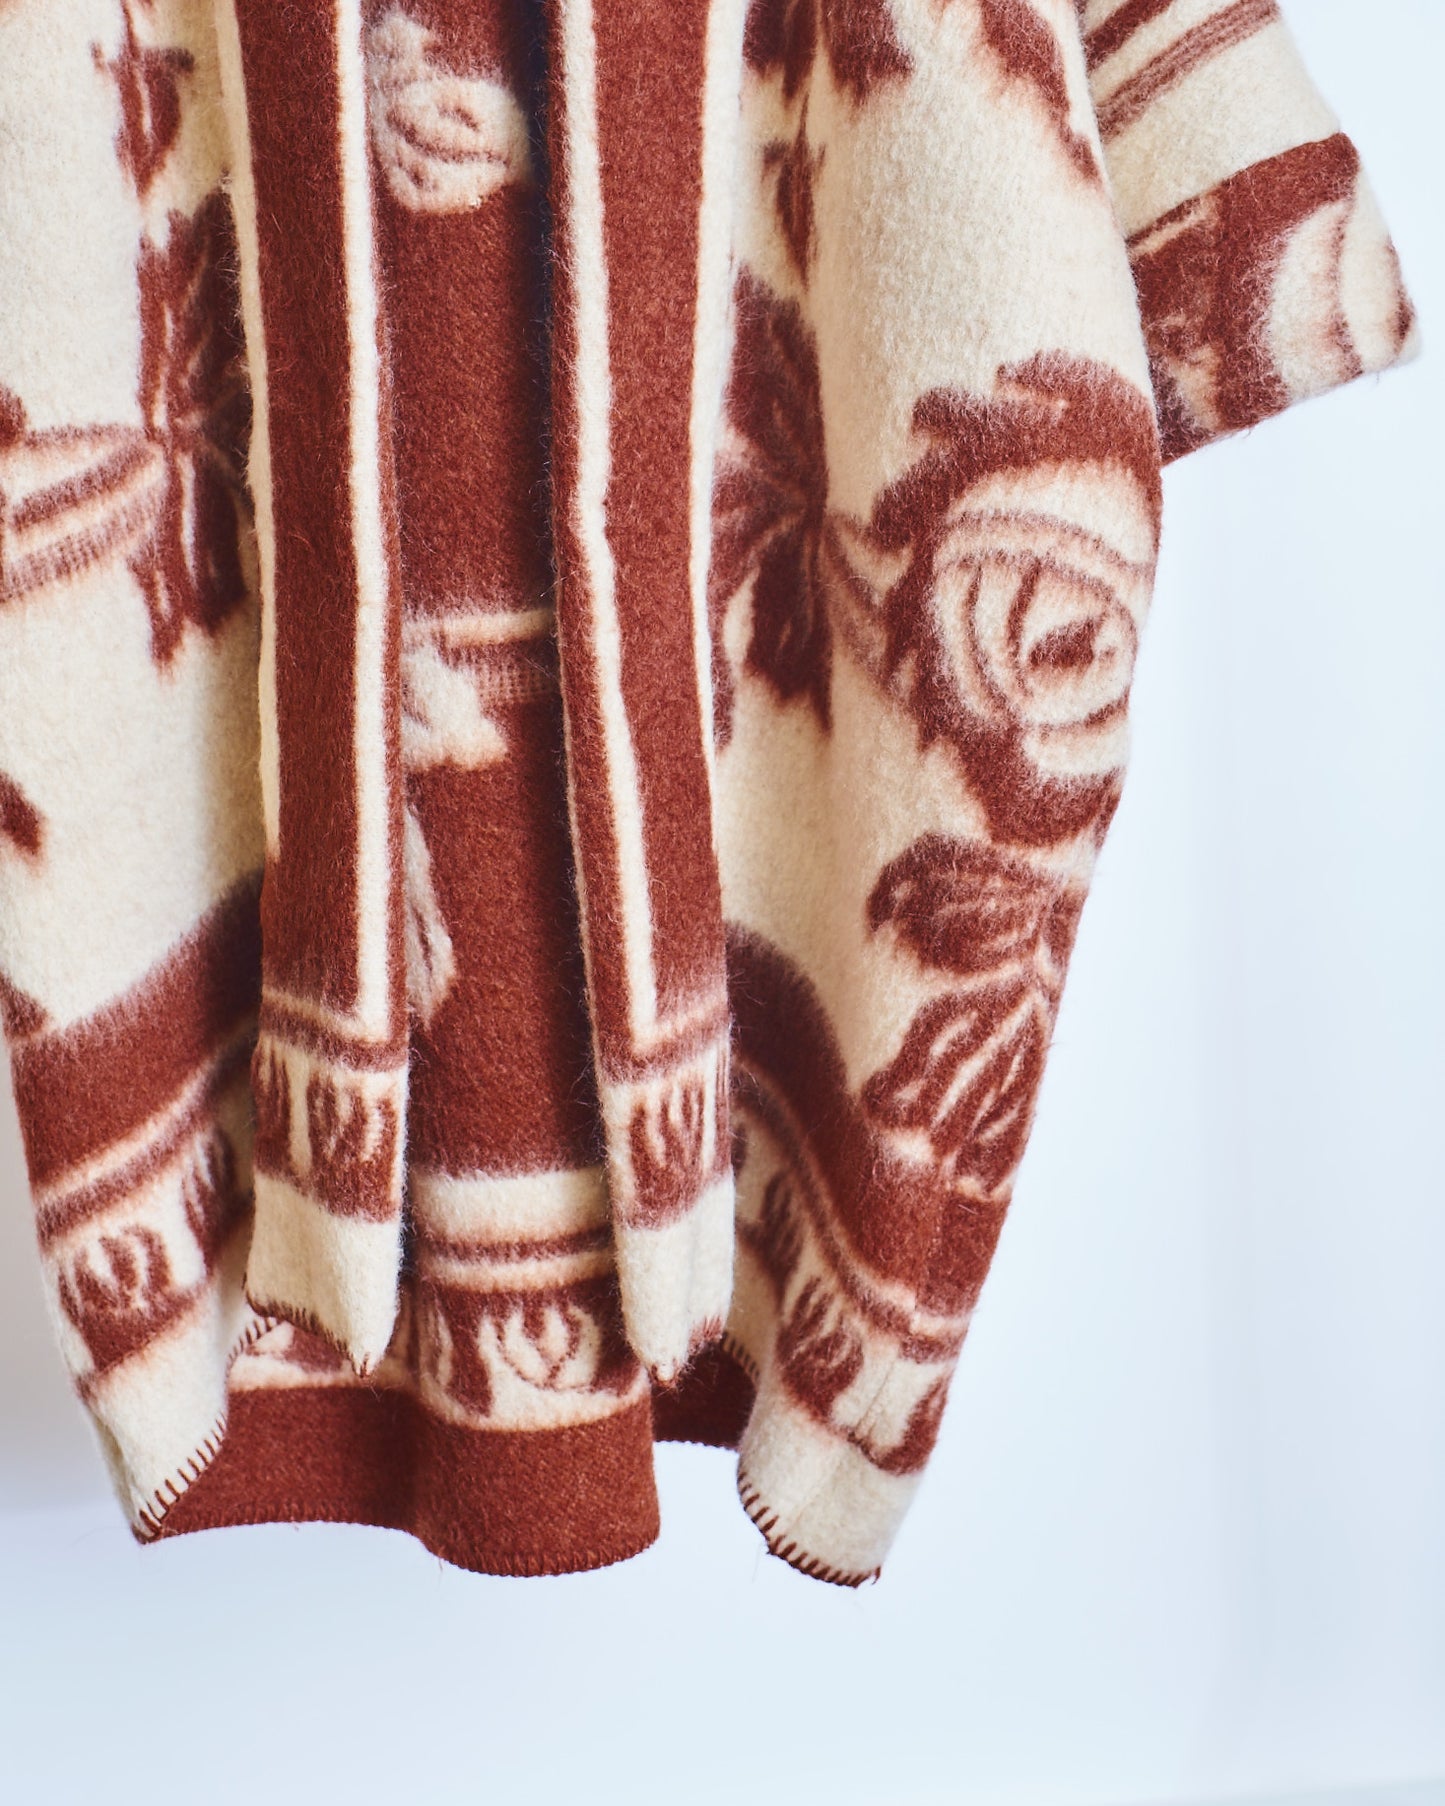 Moana Vintage Repurposed Rust Floral Kimono Blanket Coat